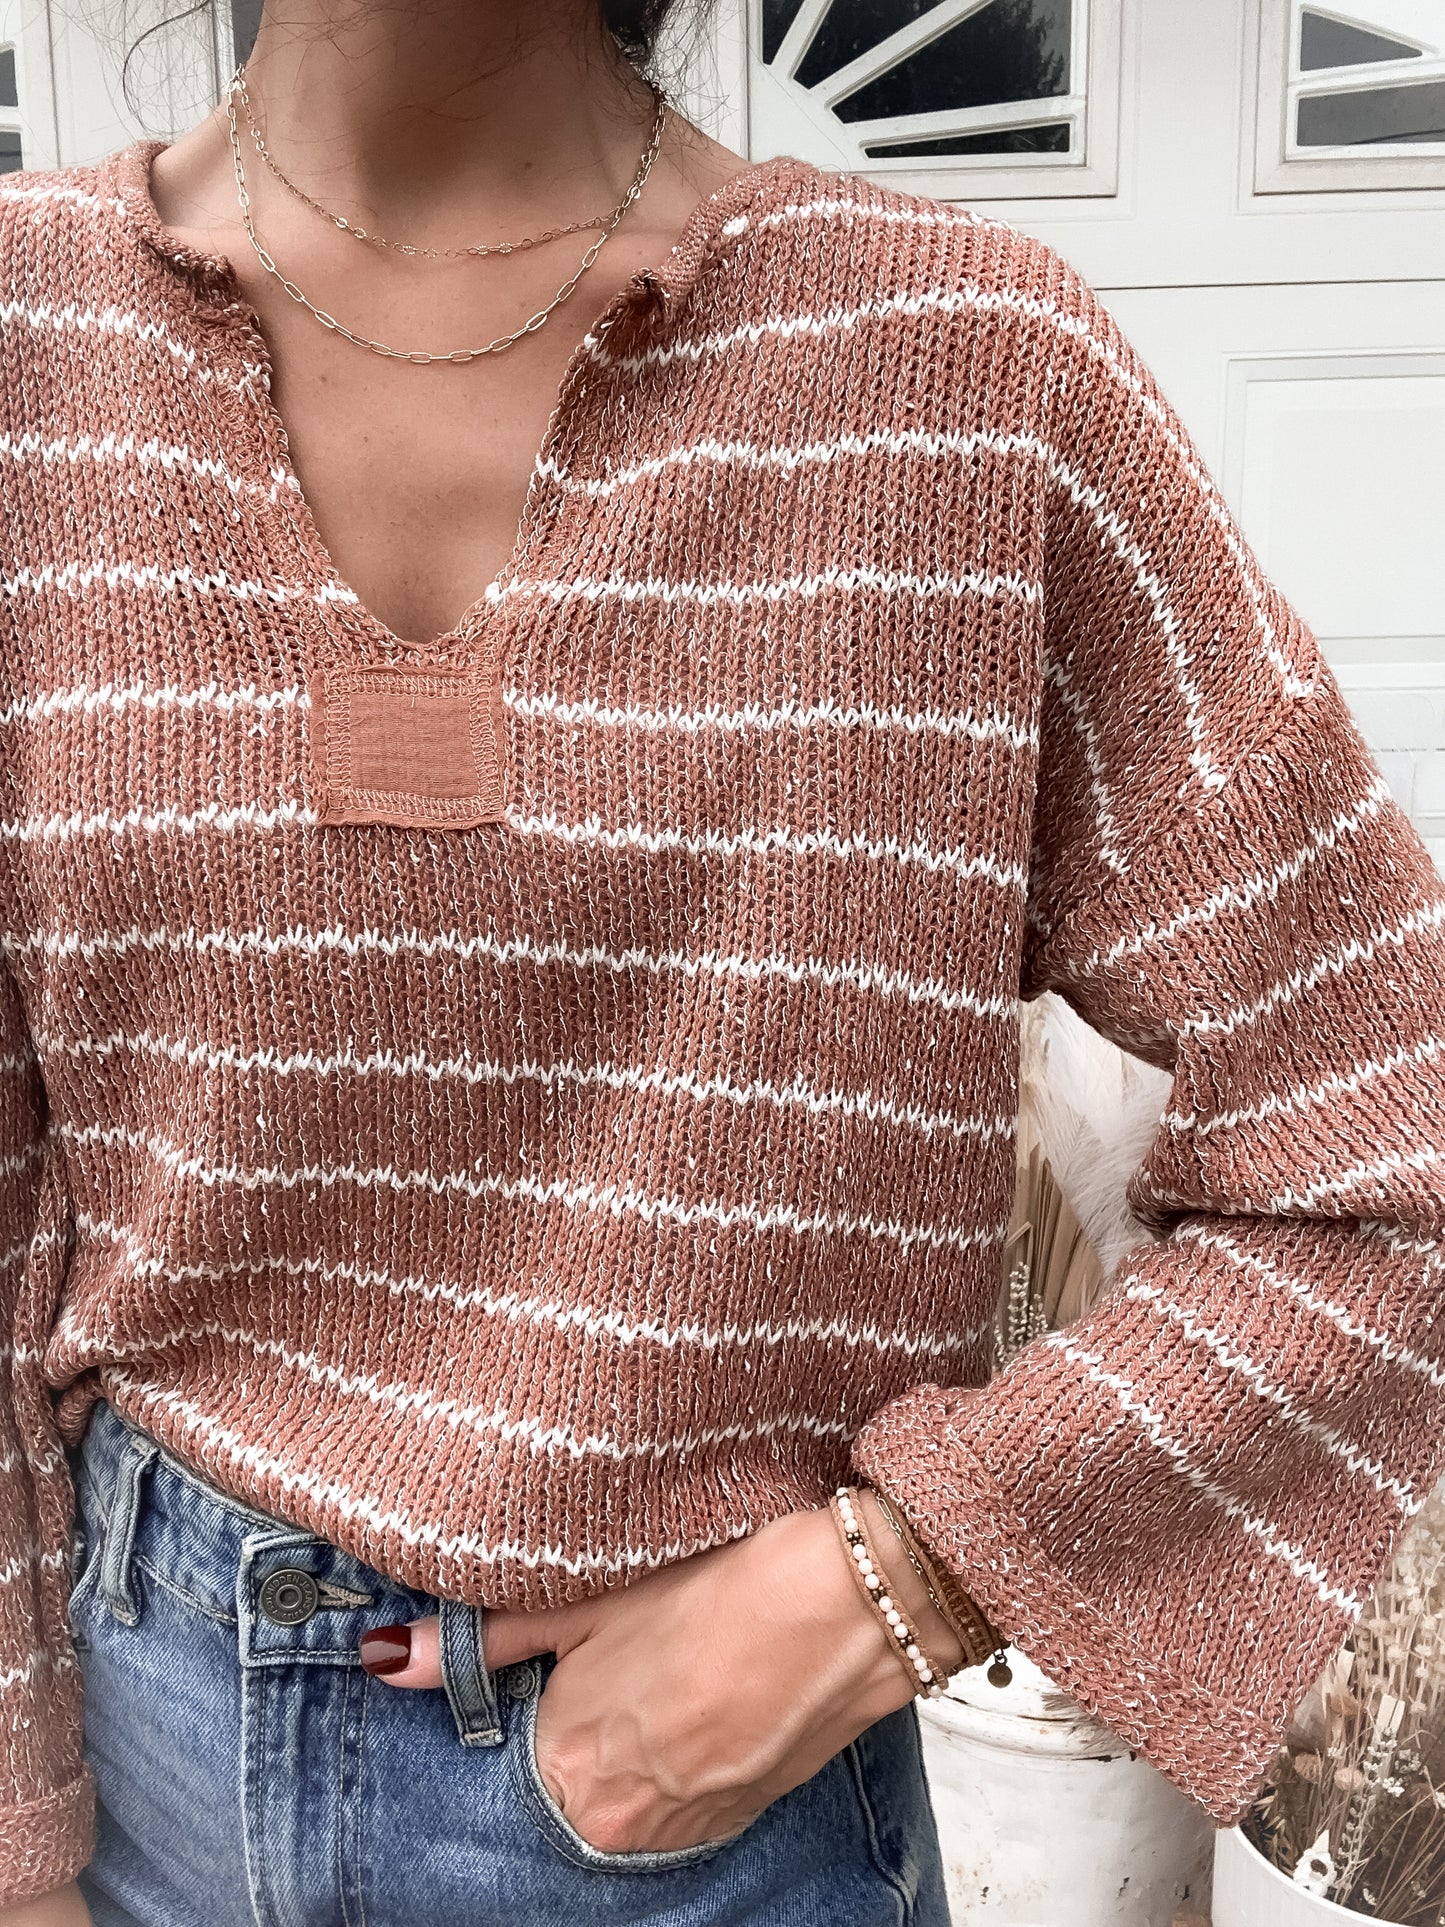 Striped Knit Sweater - Sienna